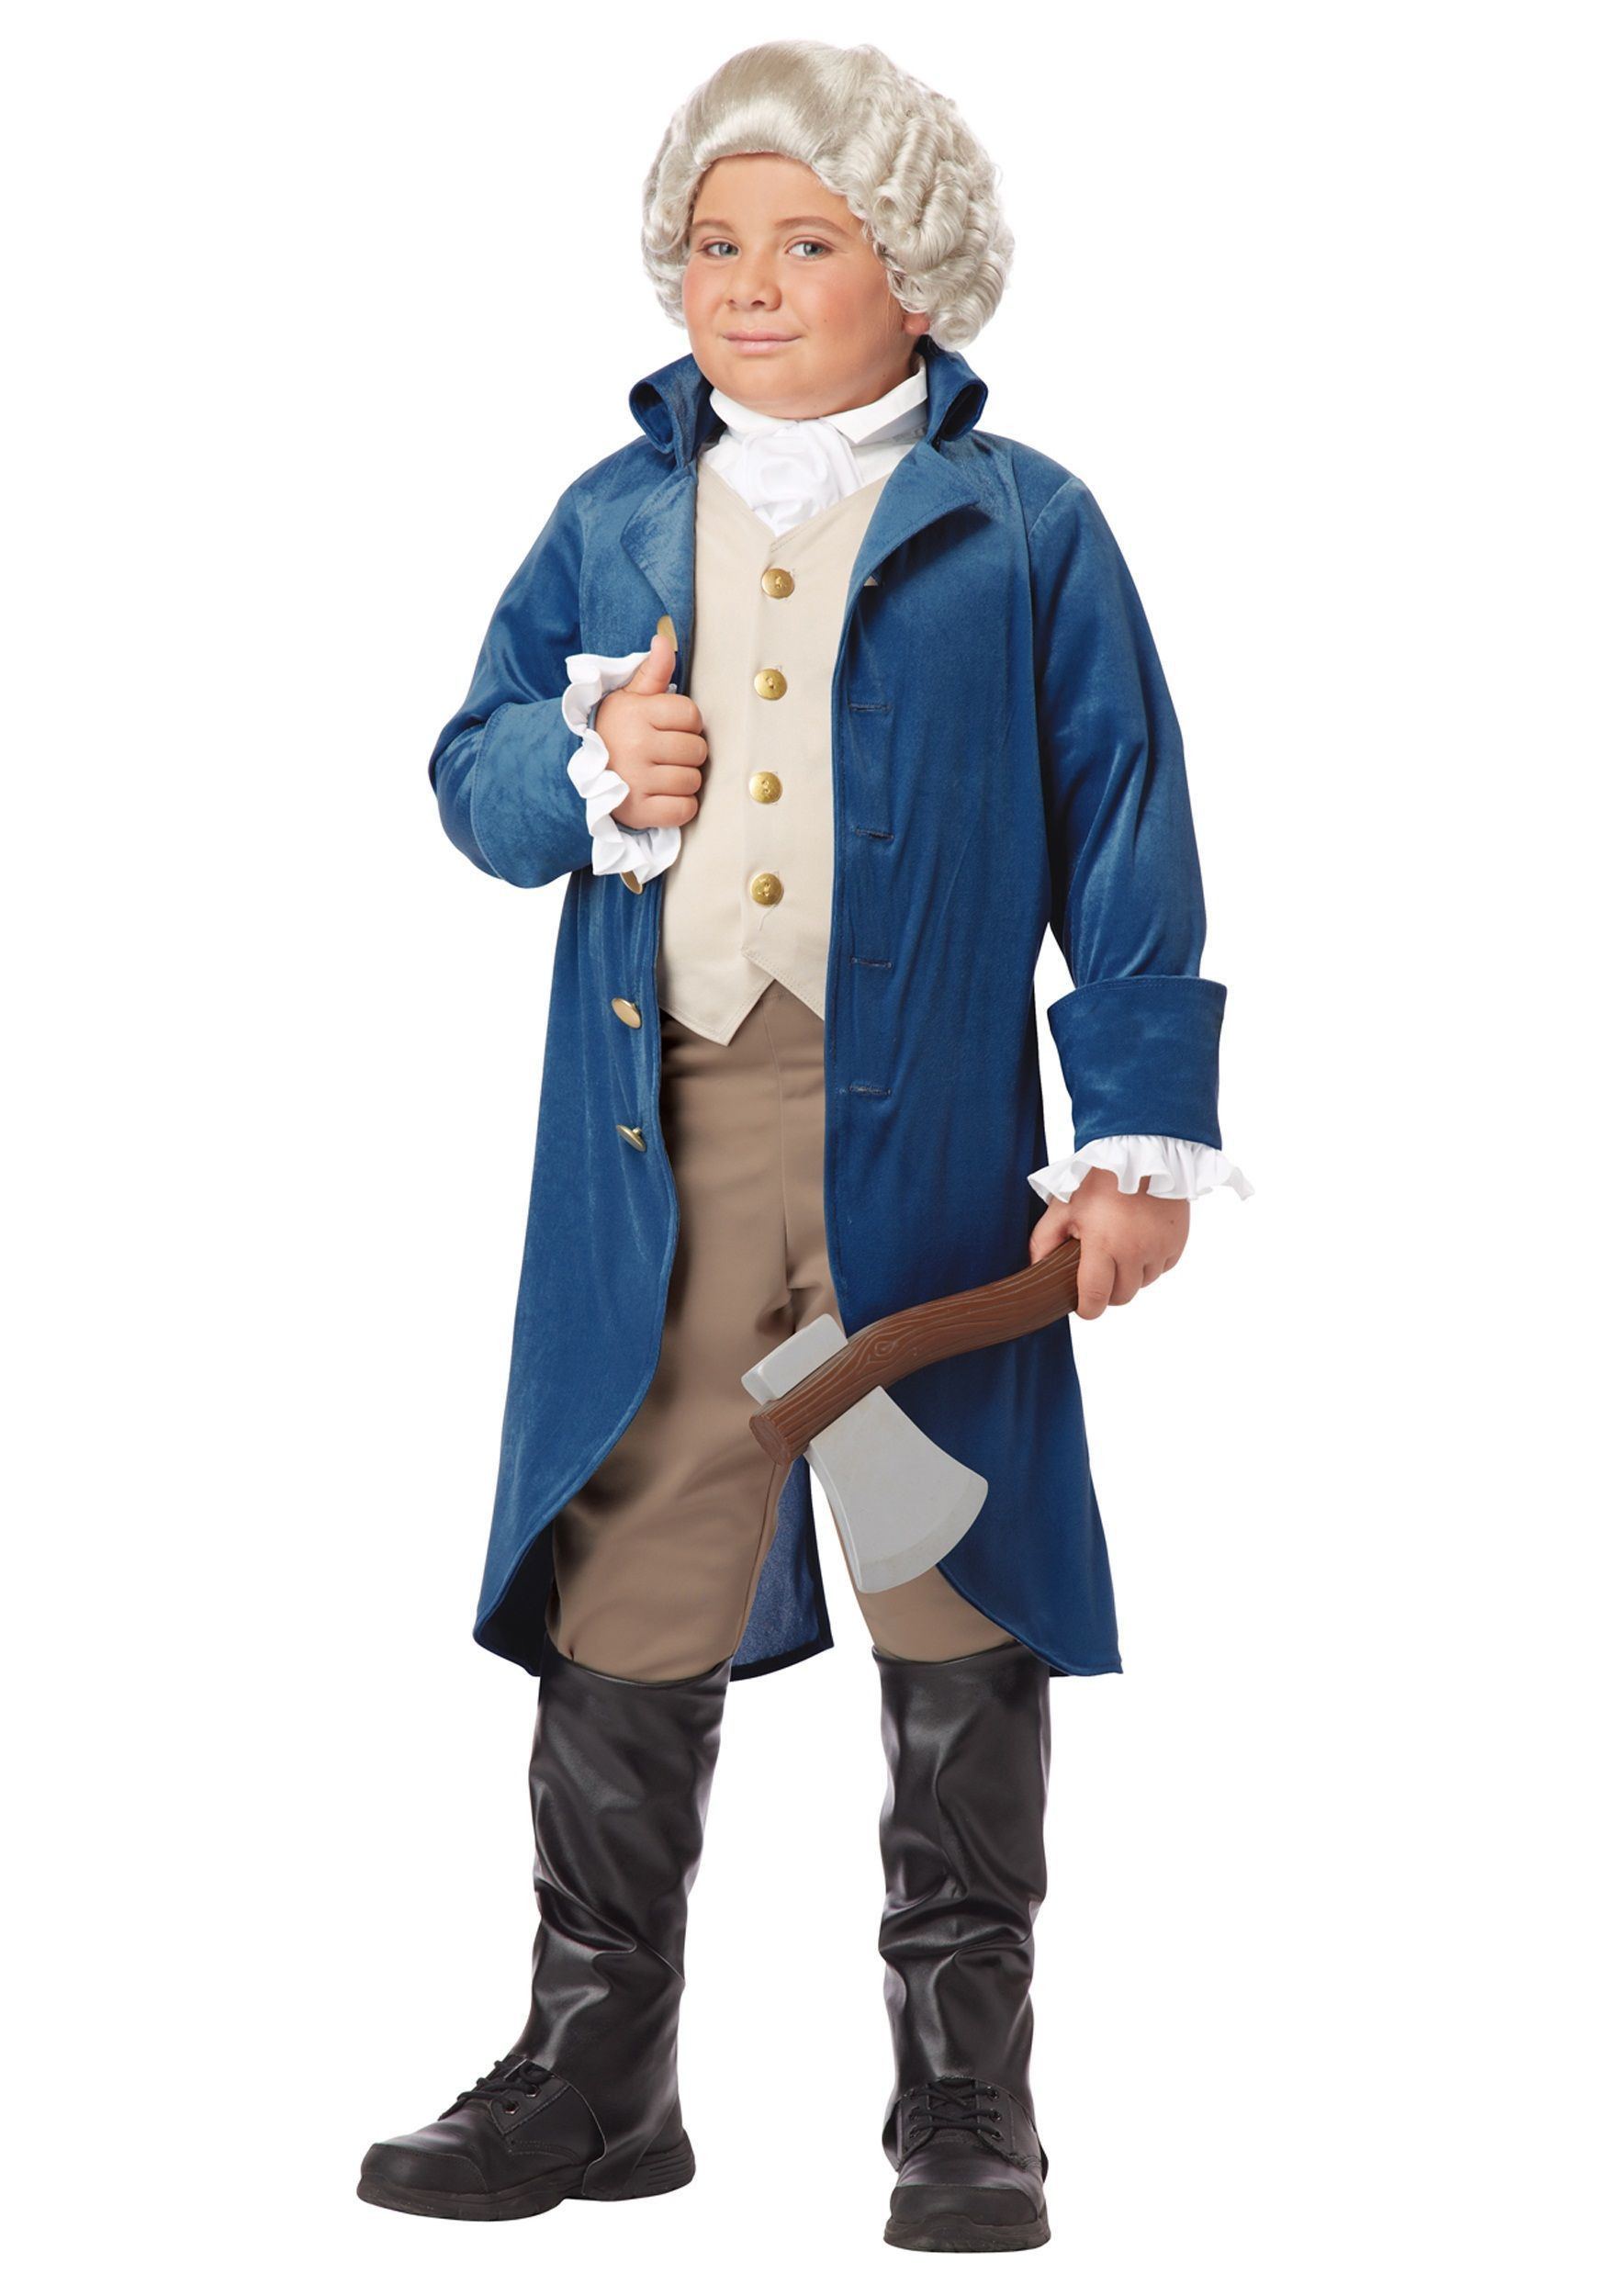 Thomas Jefferson Costume DIY
 New Thomas Jefferson Costume Diy Amazing Design